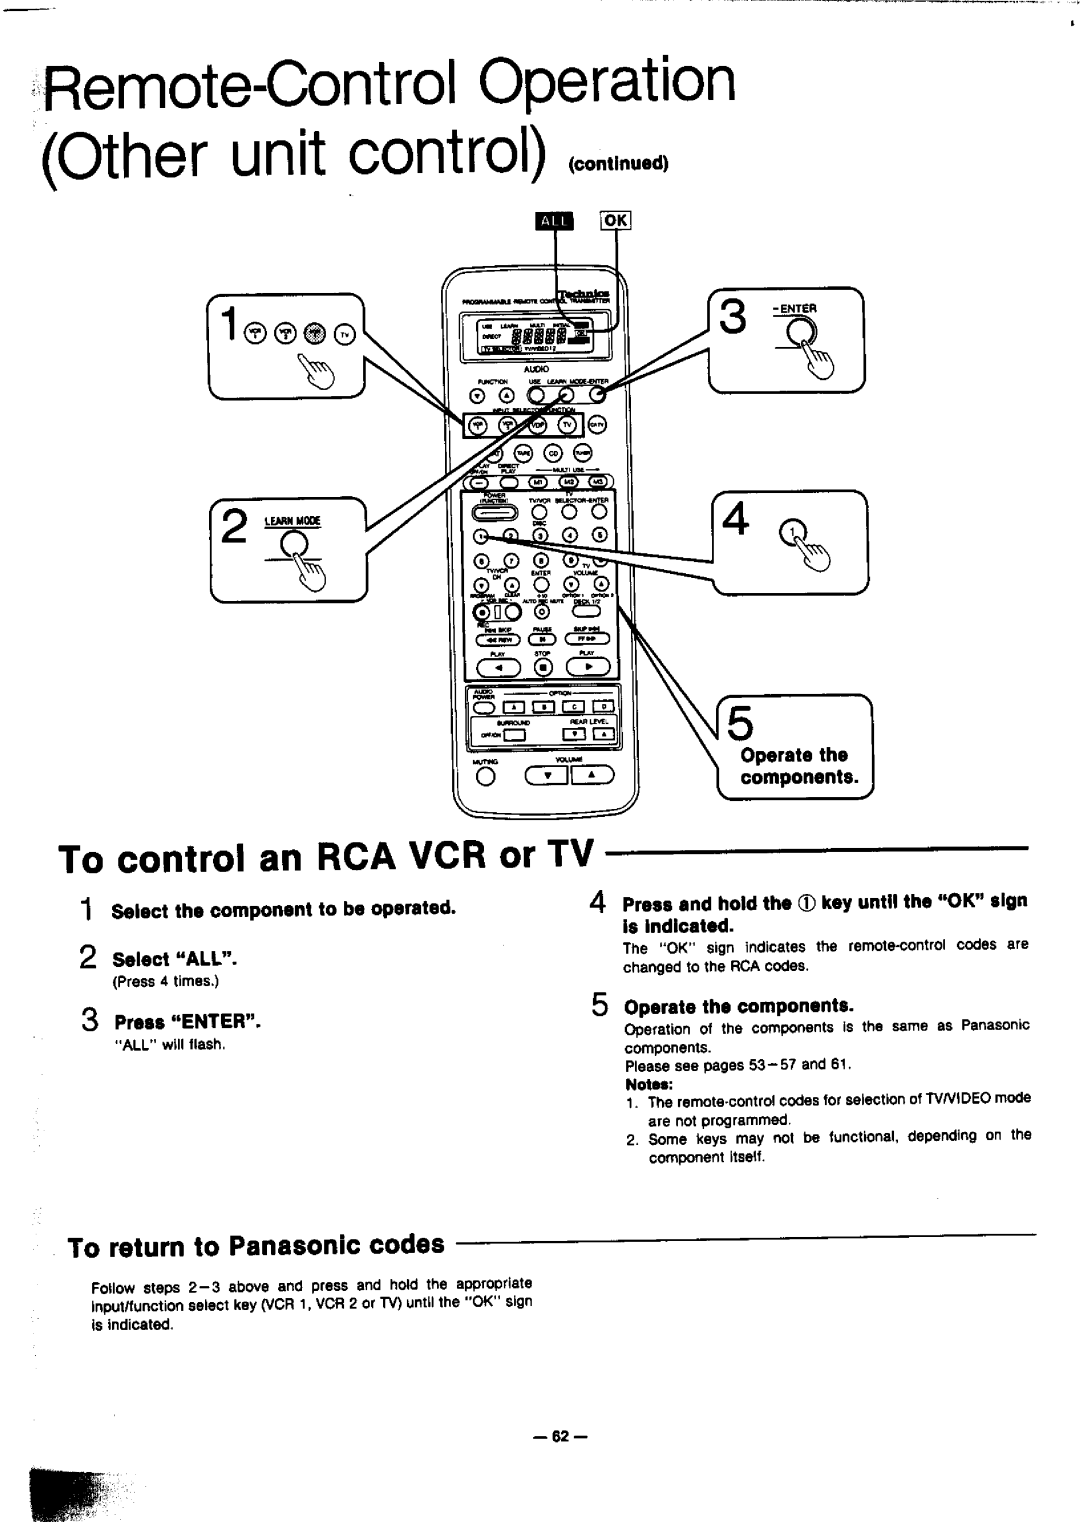 Technics SA-GX910 manual 